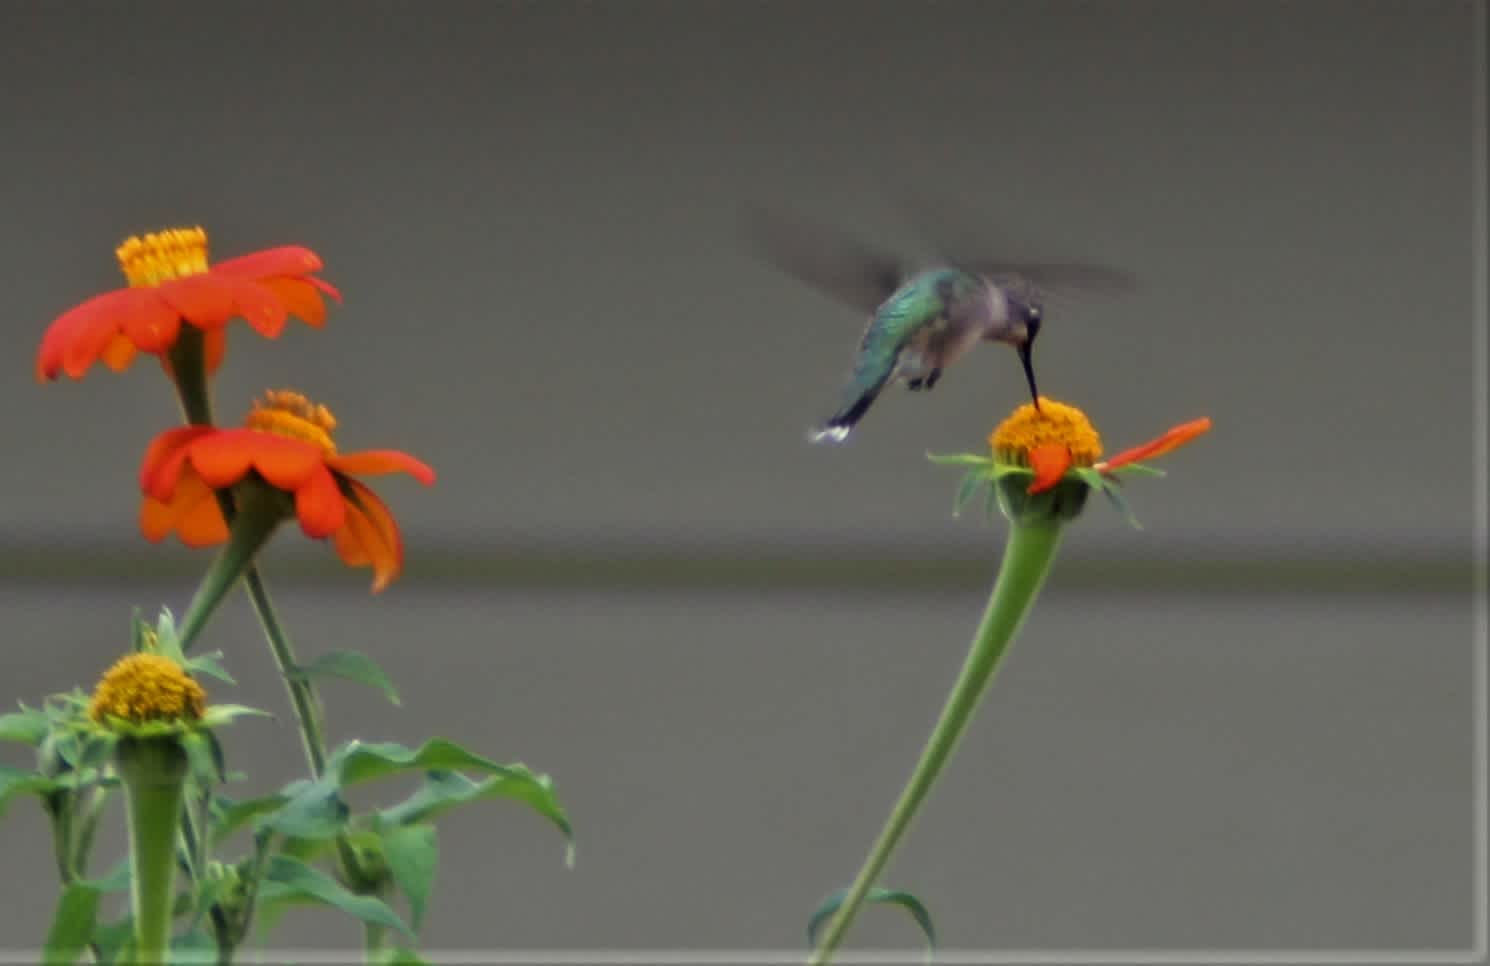 Ruby-throated hummingbird feeding on backyard flowers

credit: jldm/iNaturalist